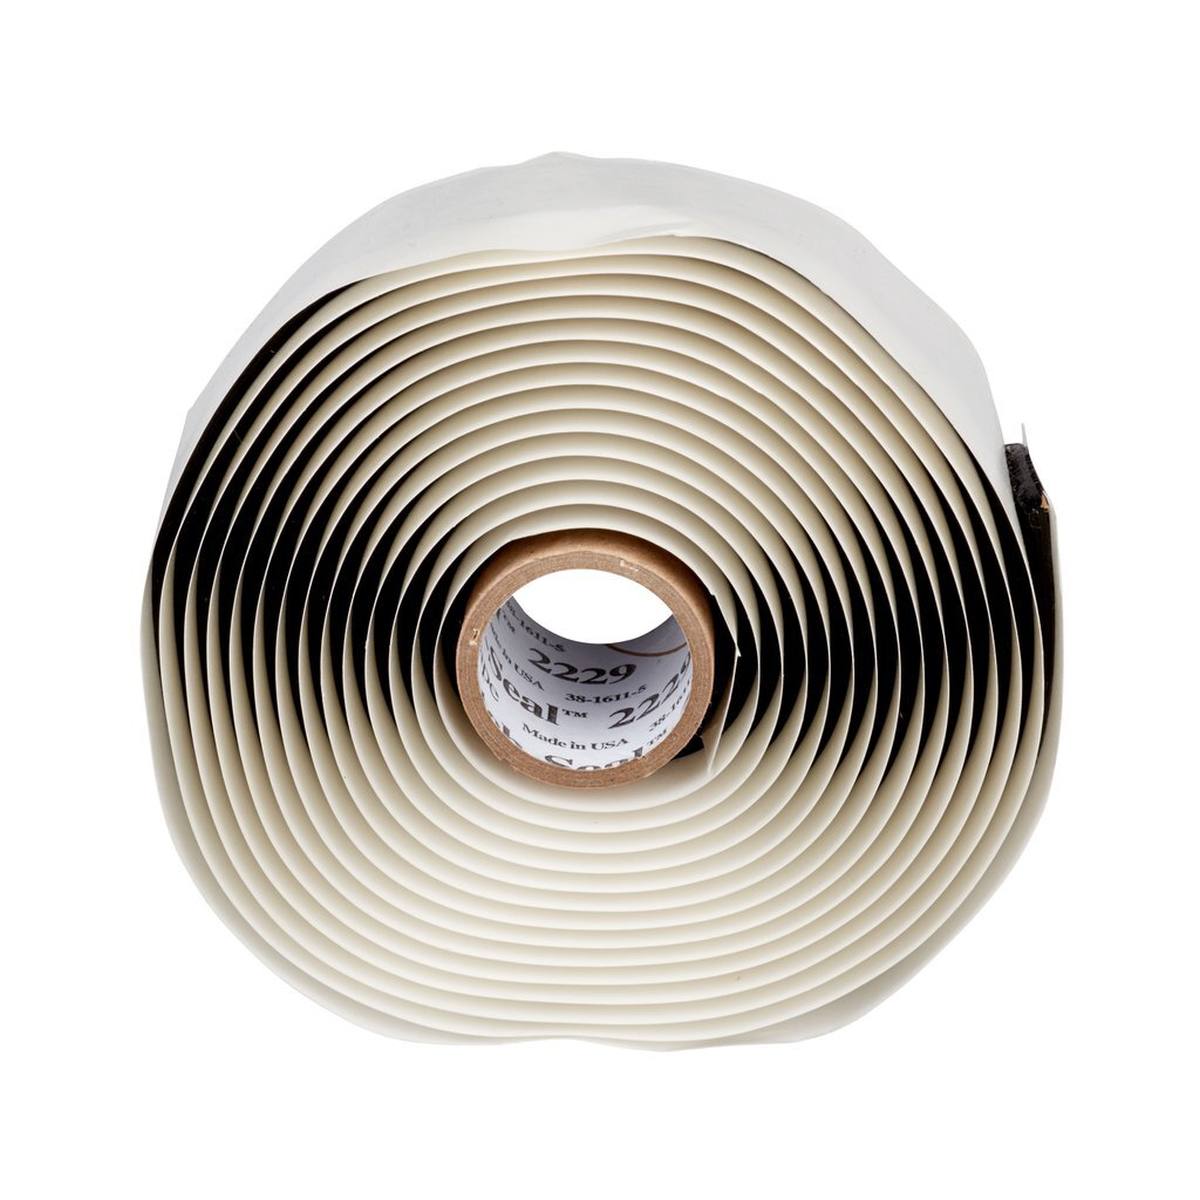 3M Scotch 2229 mastic tape, self-sealing, black, 25.4 mm x 3 m, 3.2 mm